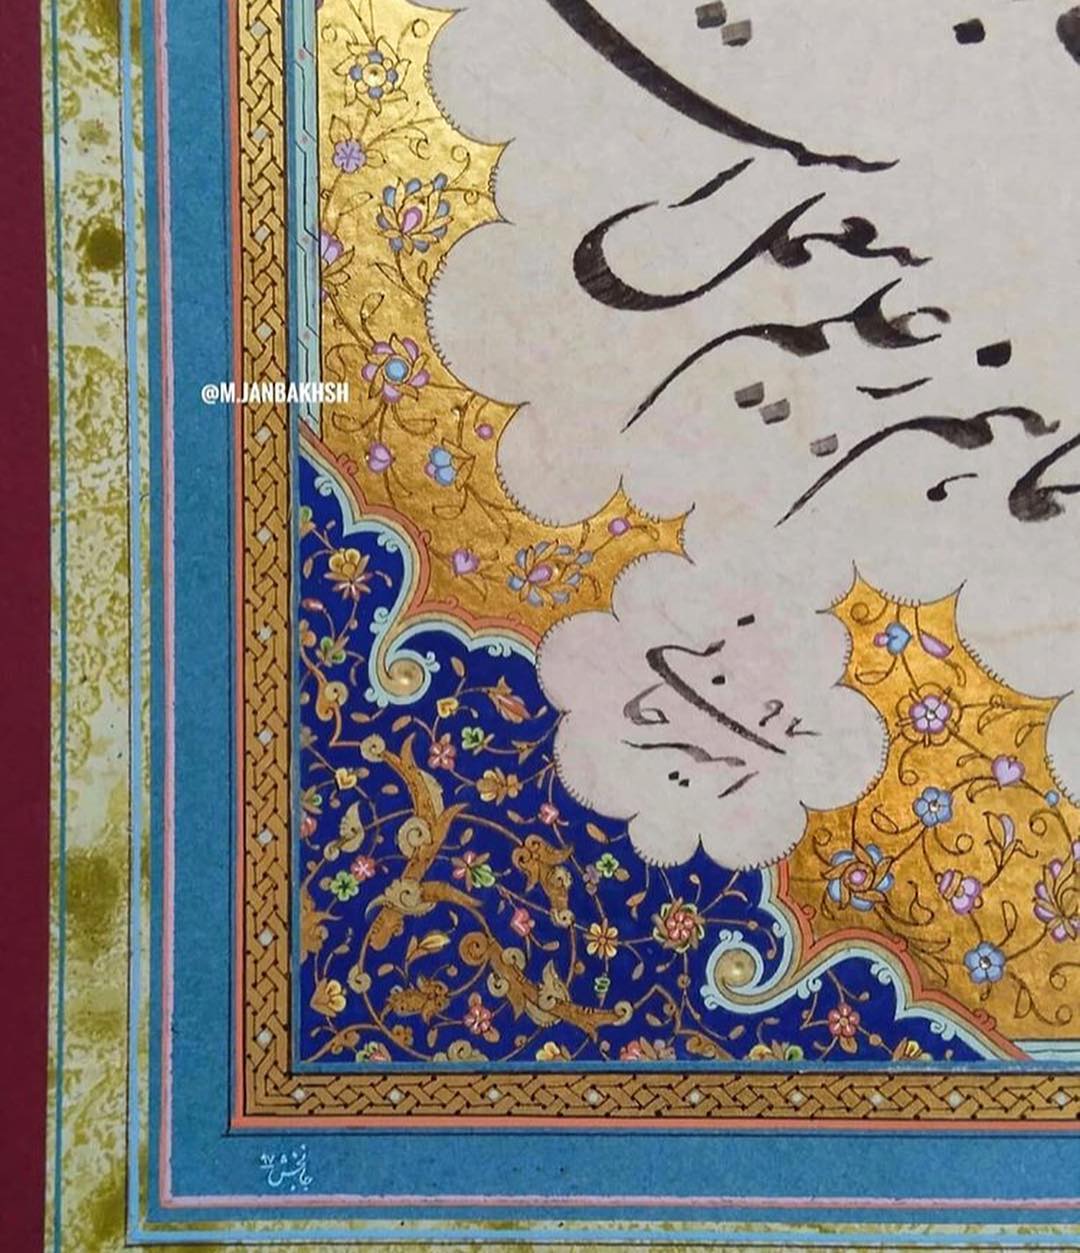 What does it say?  By Amir Khan & @m.janbakhsh 
Poem by Hafiz
==================…